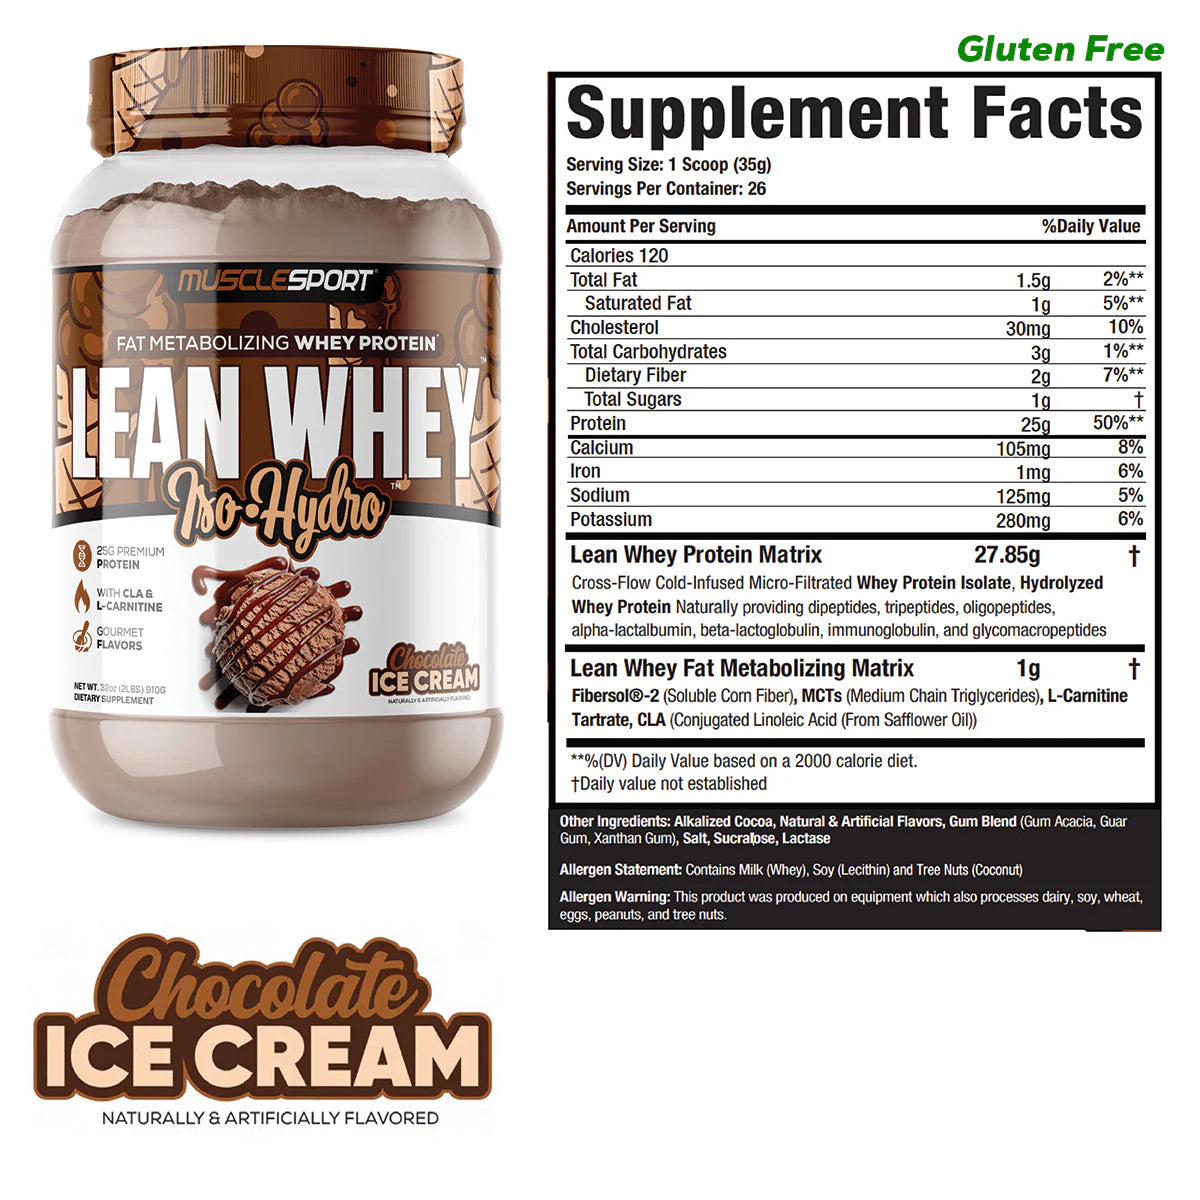 Muscle Sport Lean Whey Iso-Hydro 2lbs (Chocolate Ice Cream)